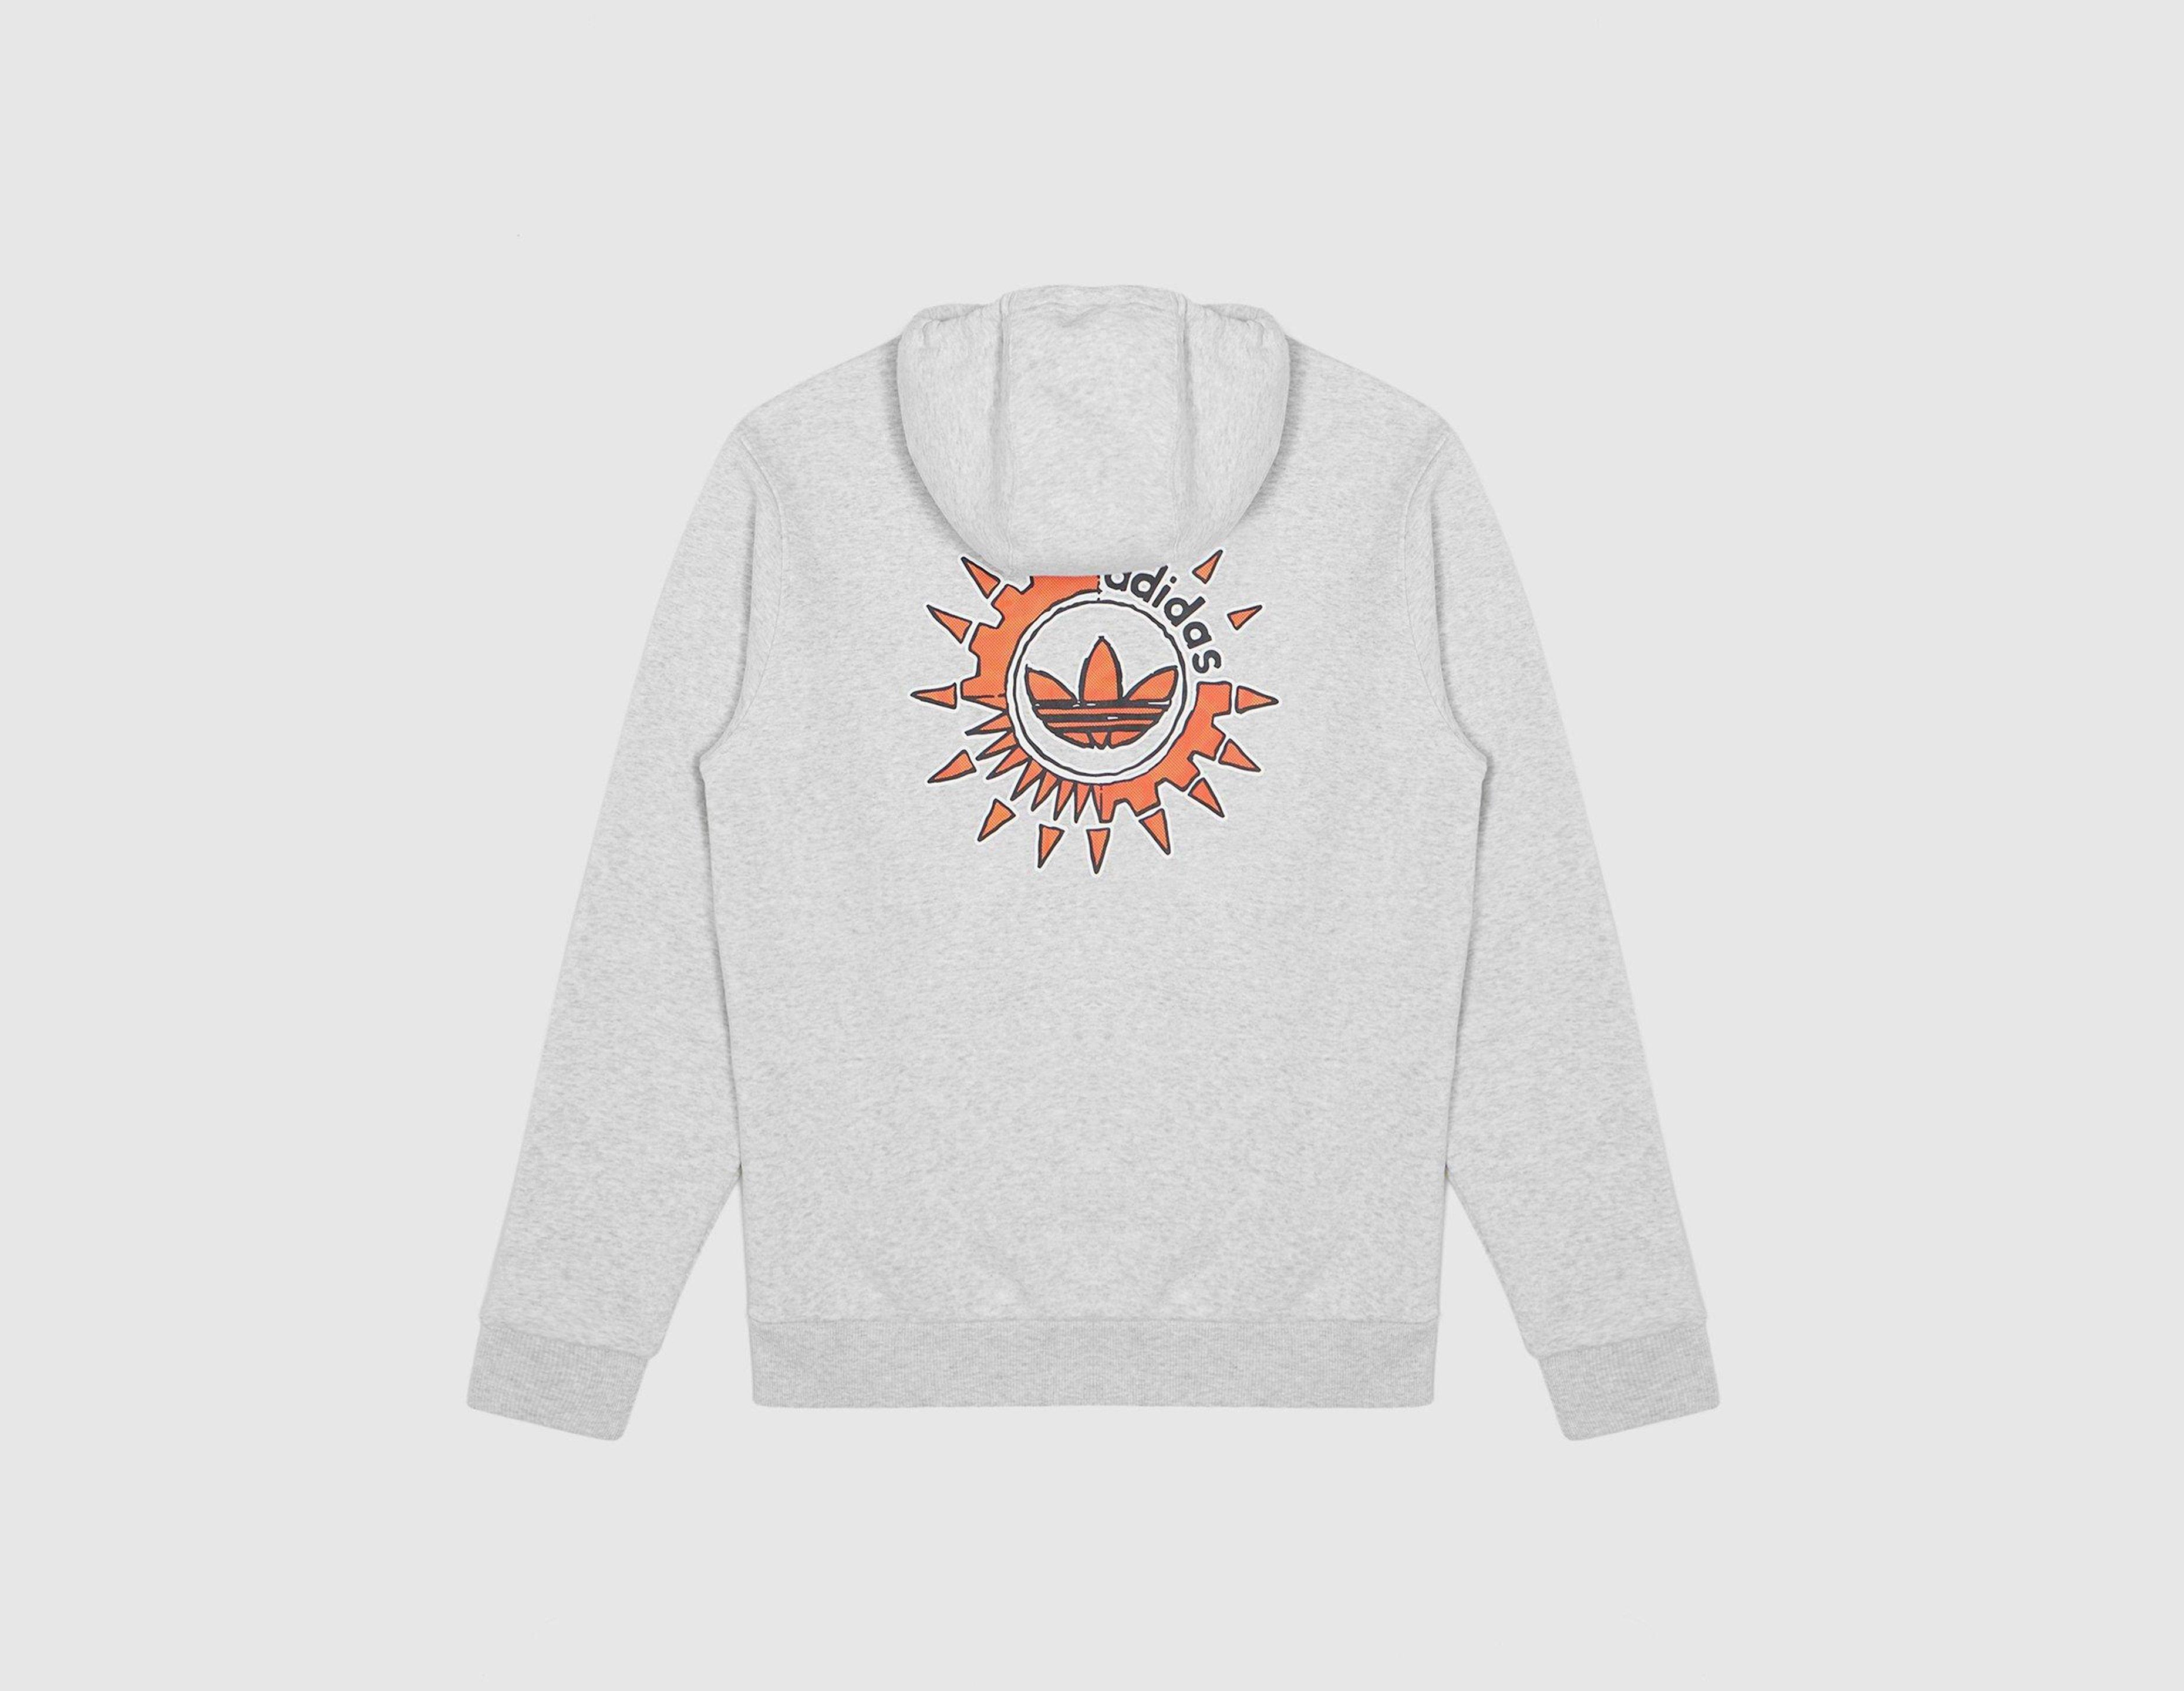 adidas originals sun graphic hoodie